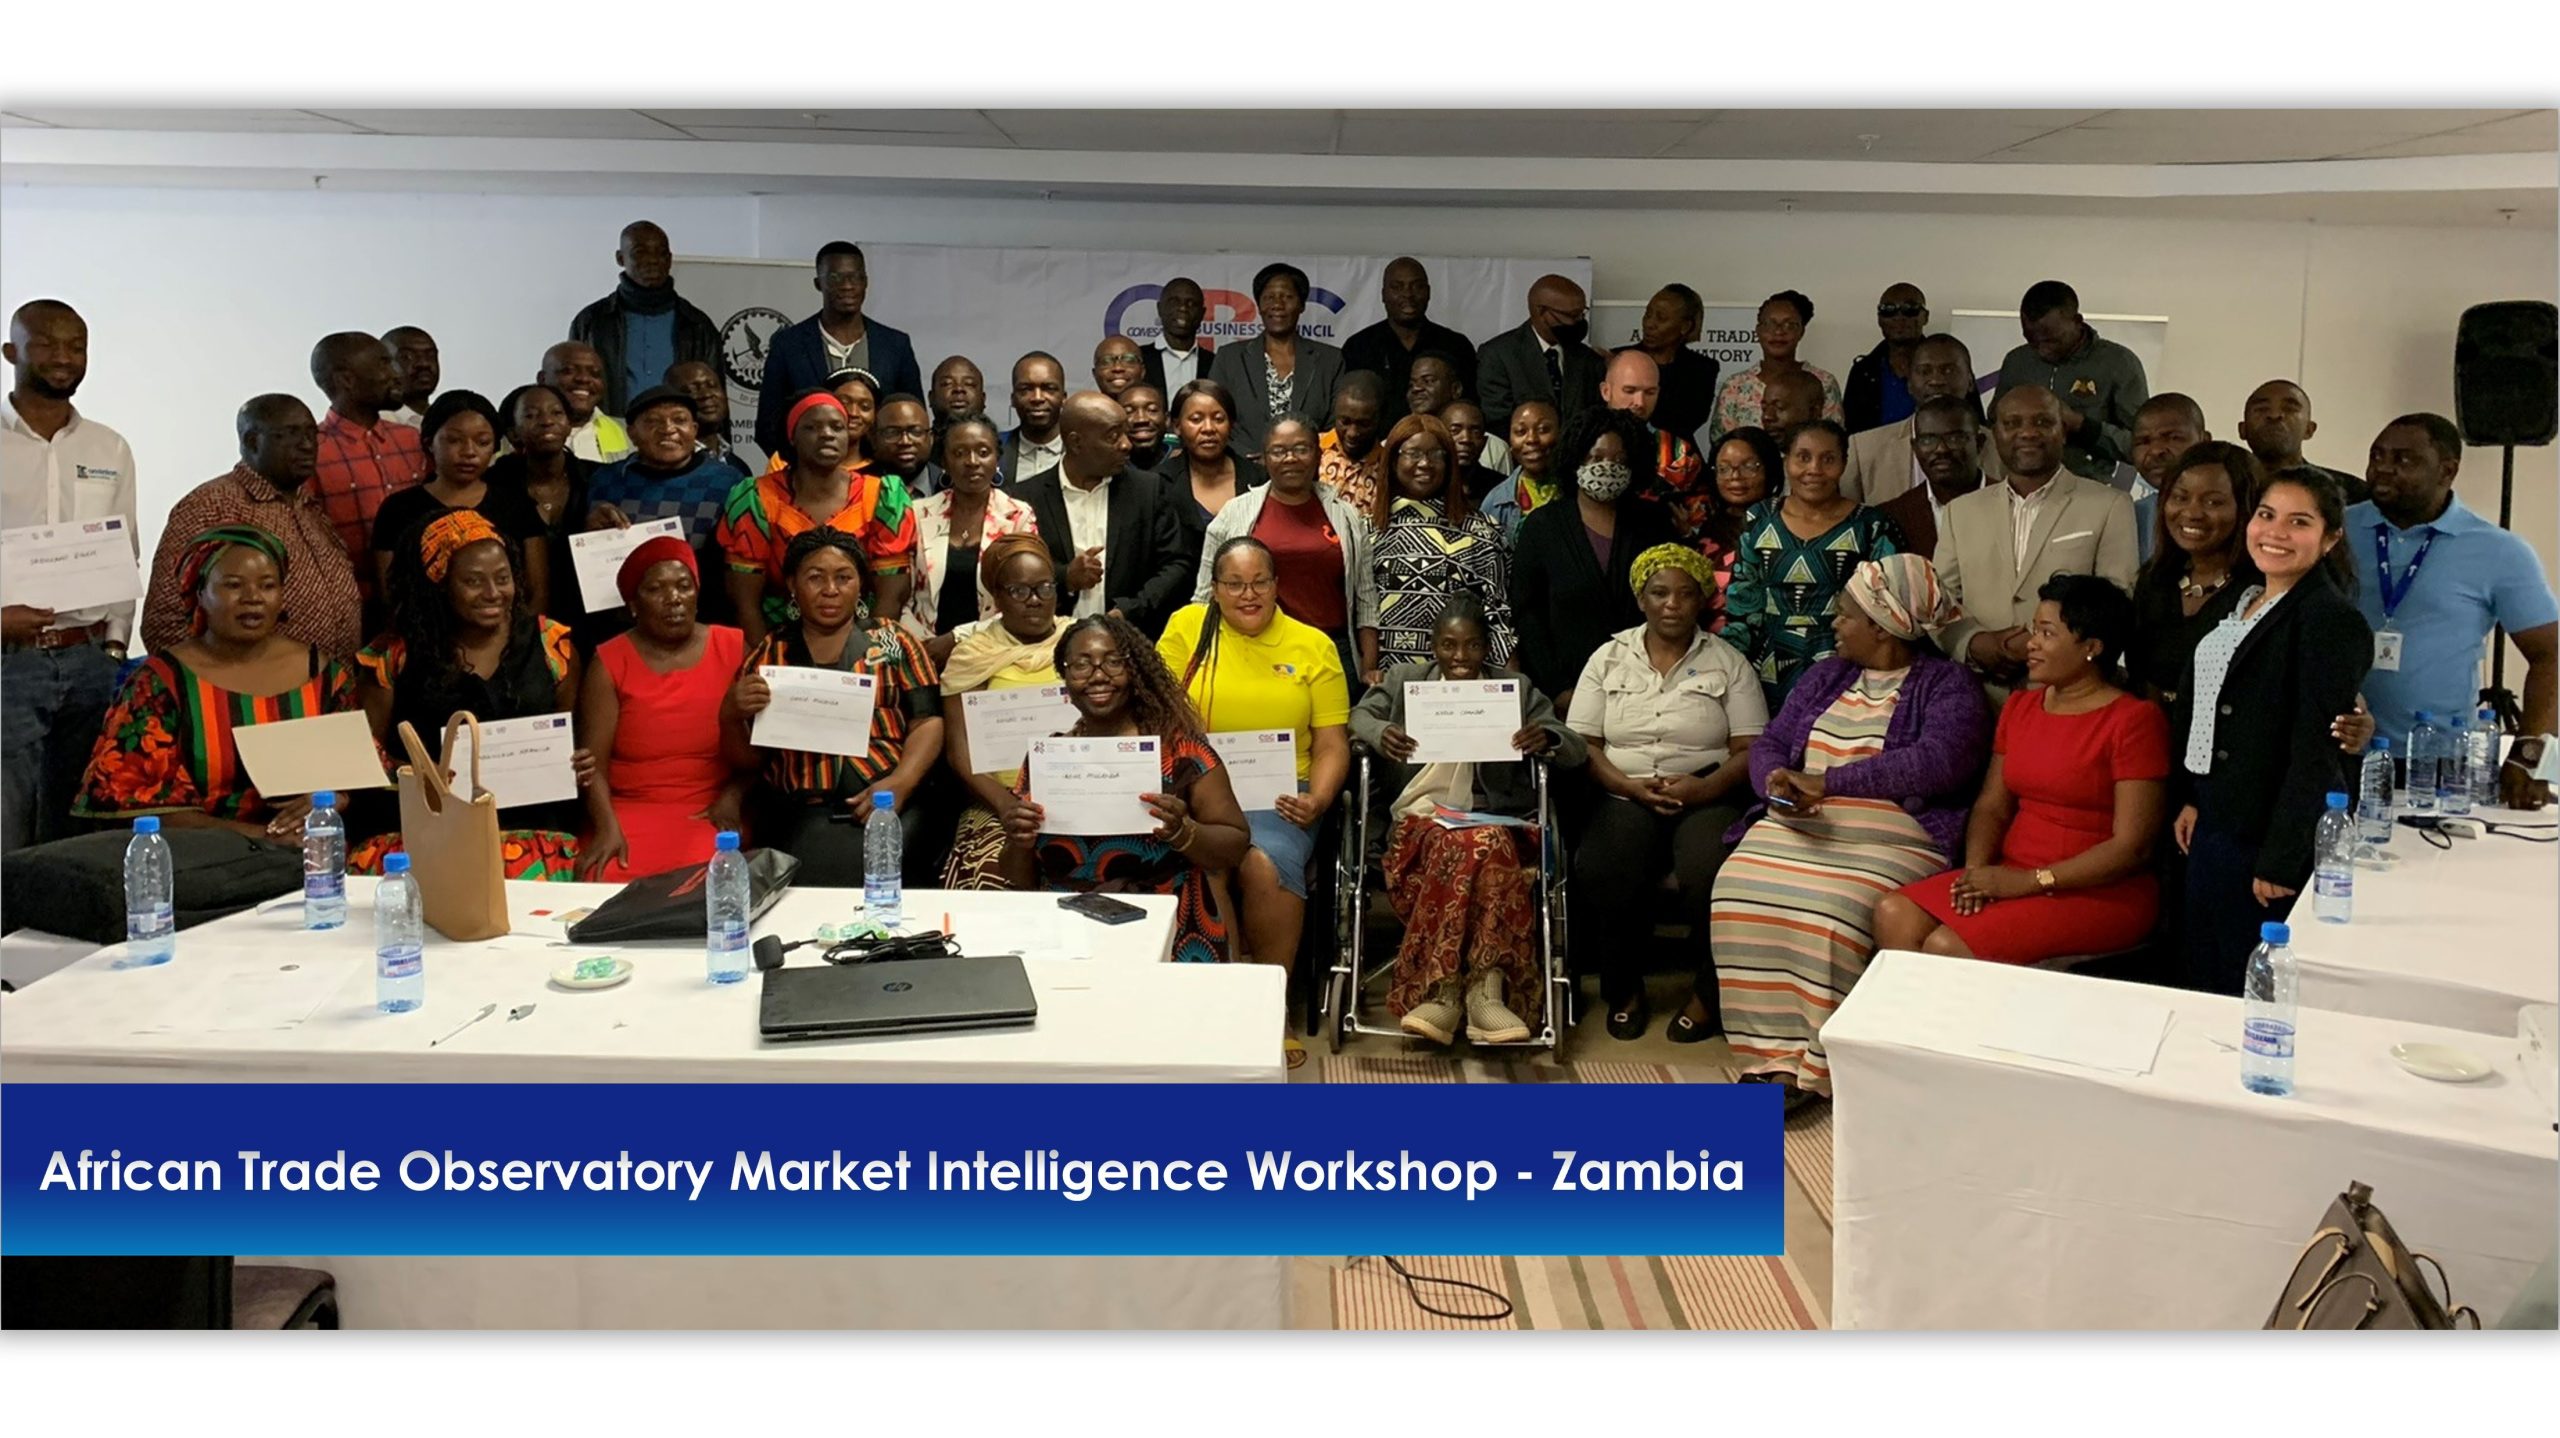 ATO Market Intelligence Workshop Zambia